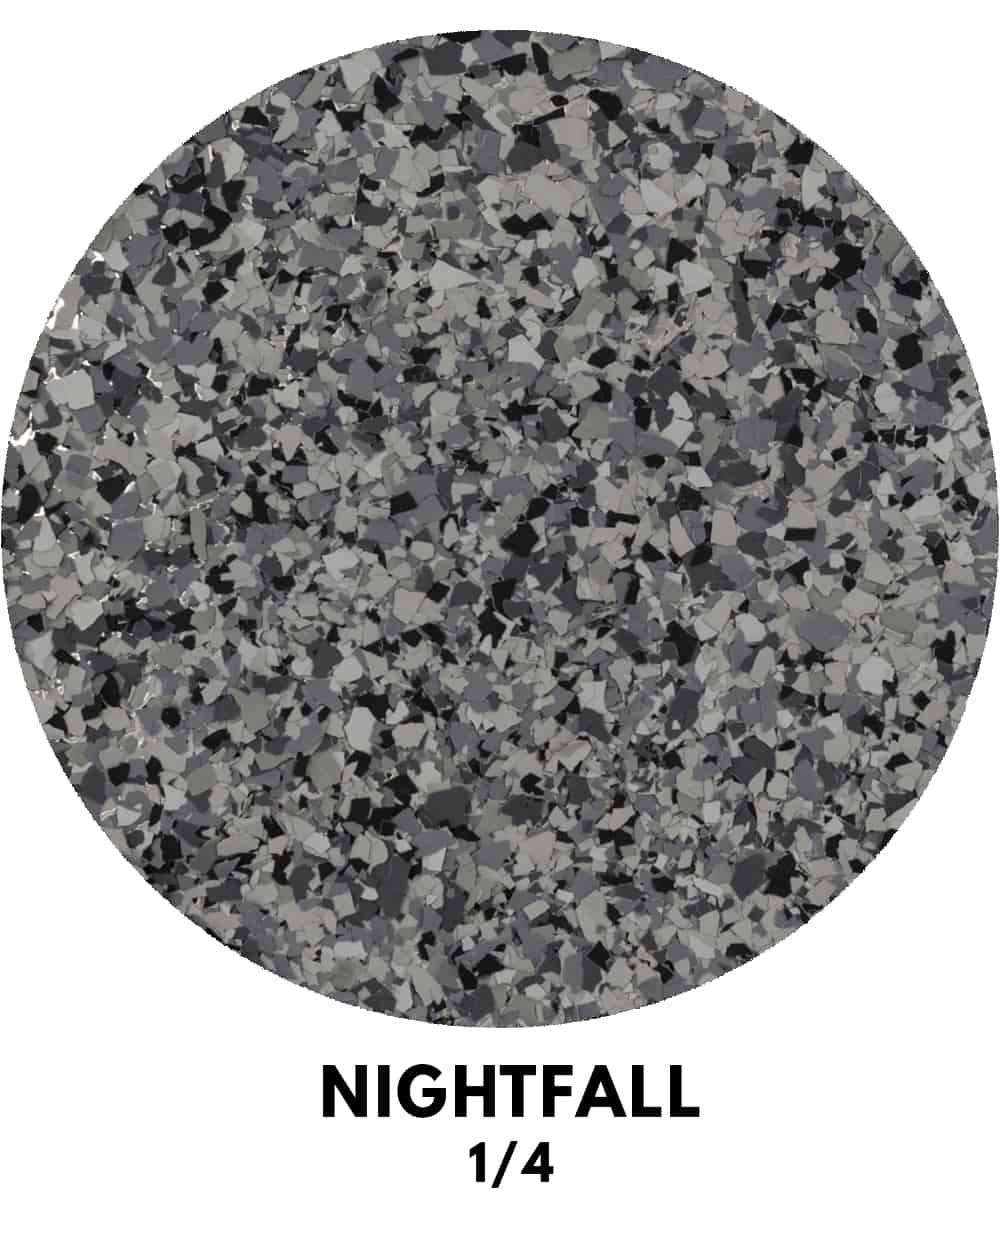 DF Nightfall 1/4 Flakes – 25 lbs